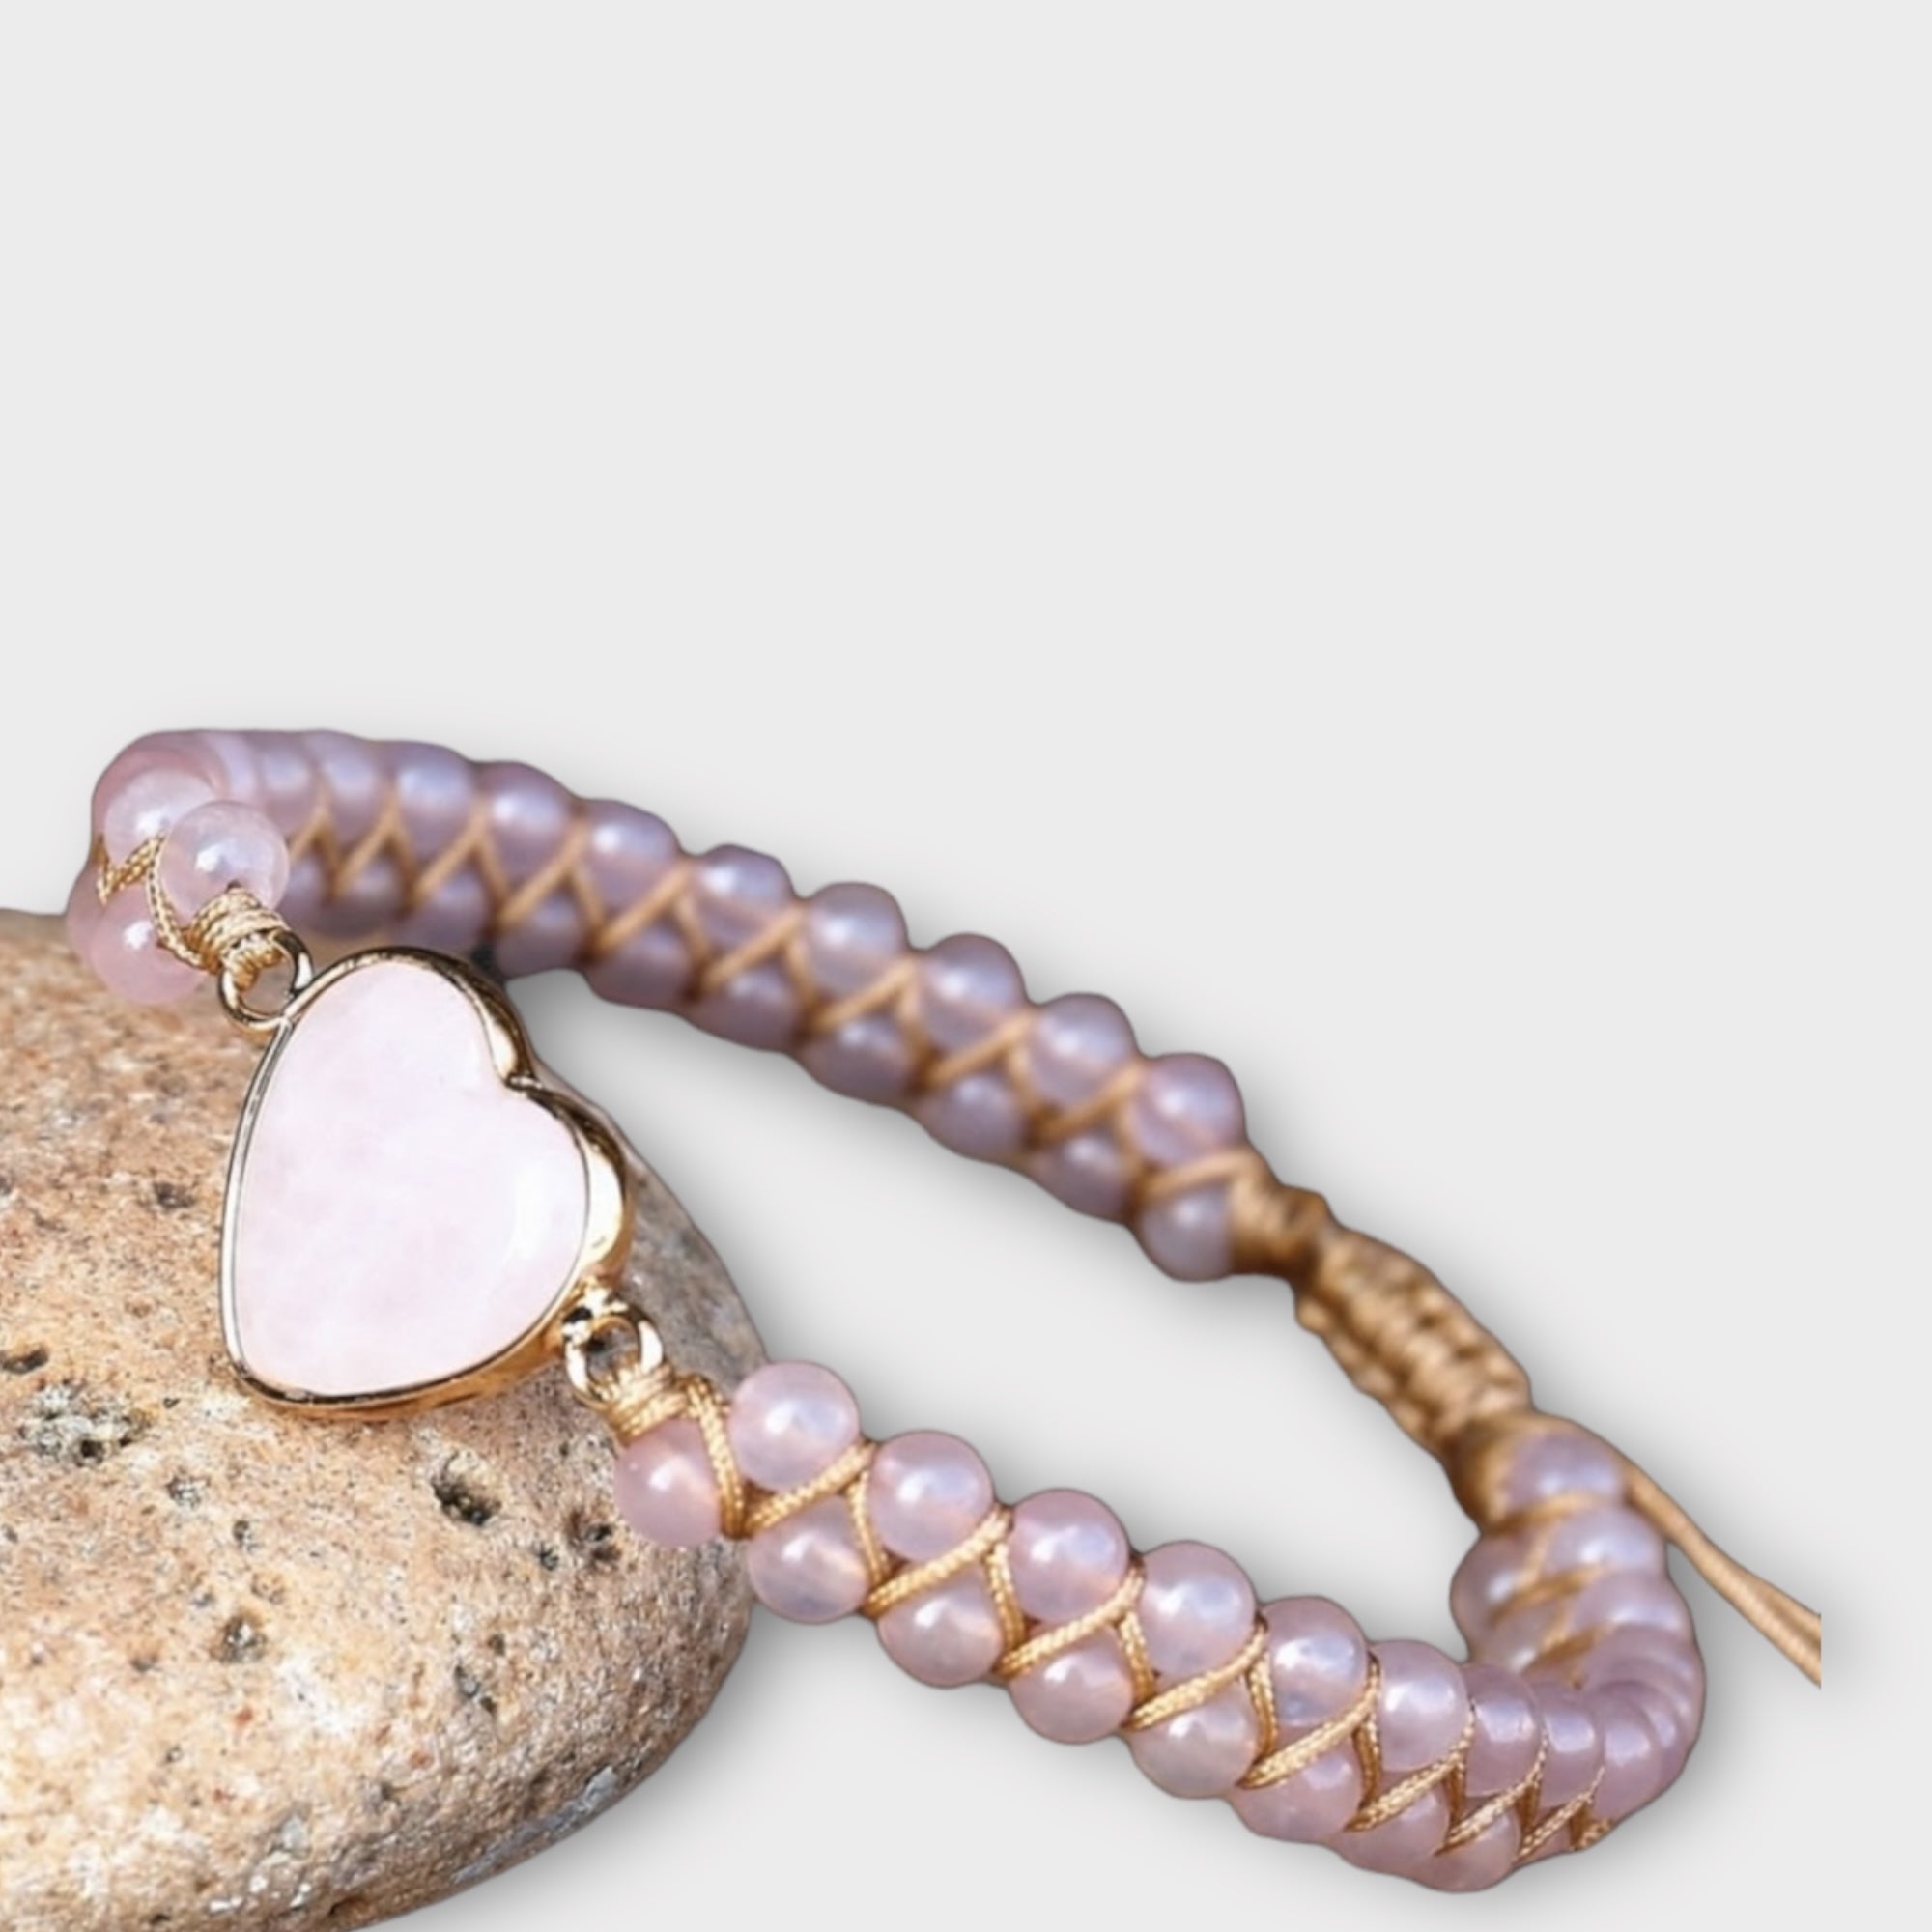 'XOO' Heart shaped stone bracelet for women